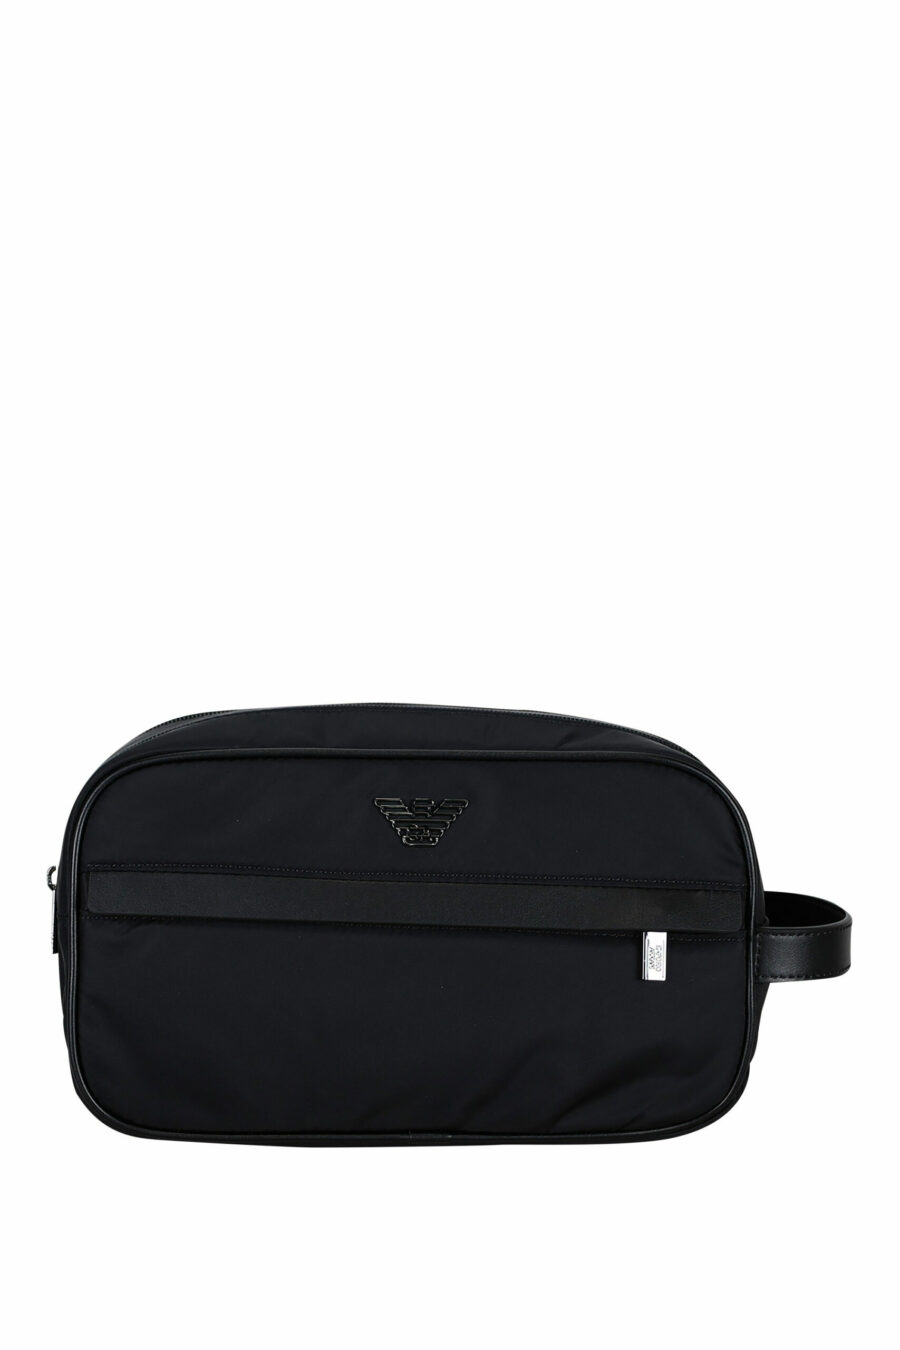 Black toilet bag with eagle mini logo - 8057767478162 scaled